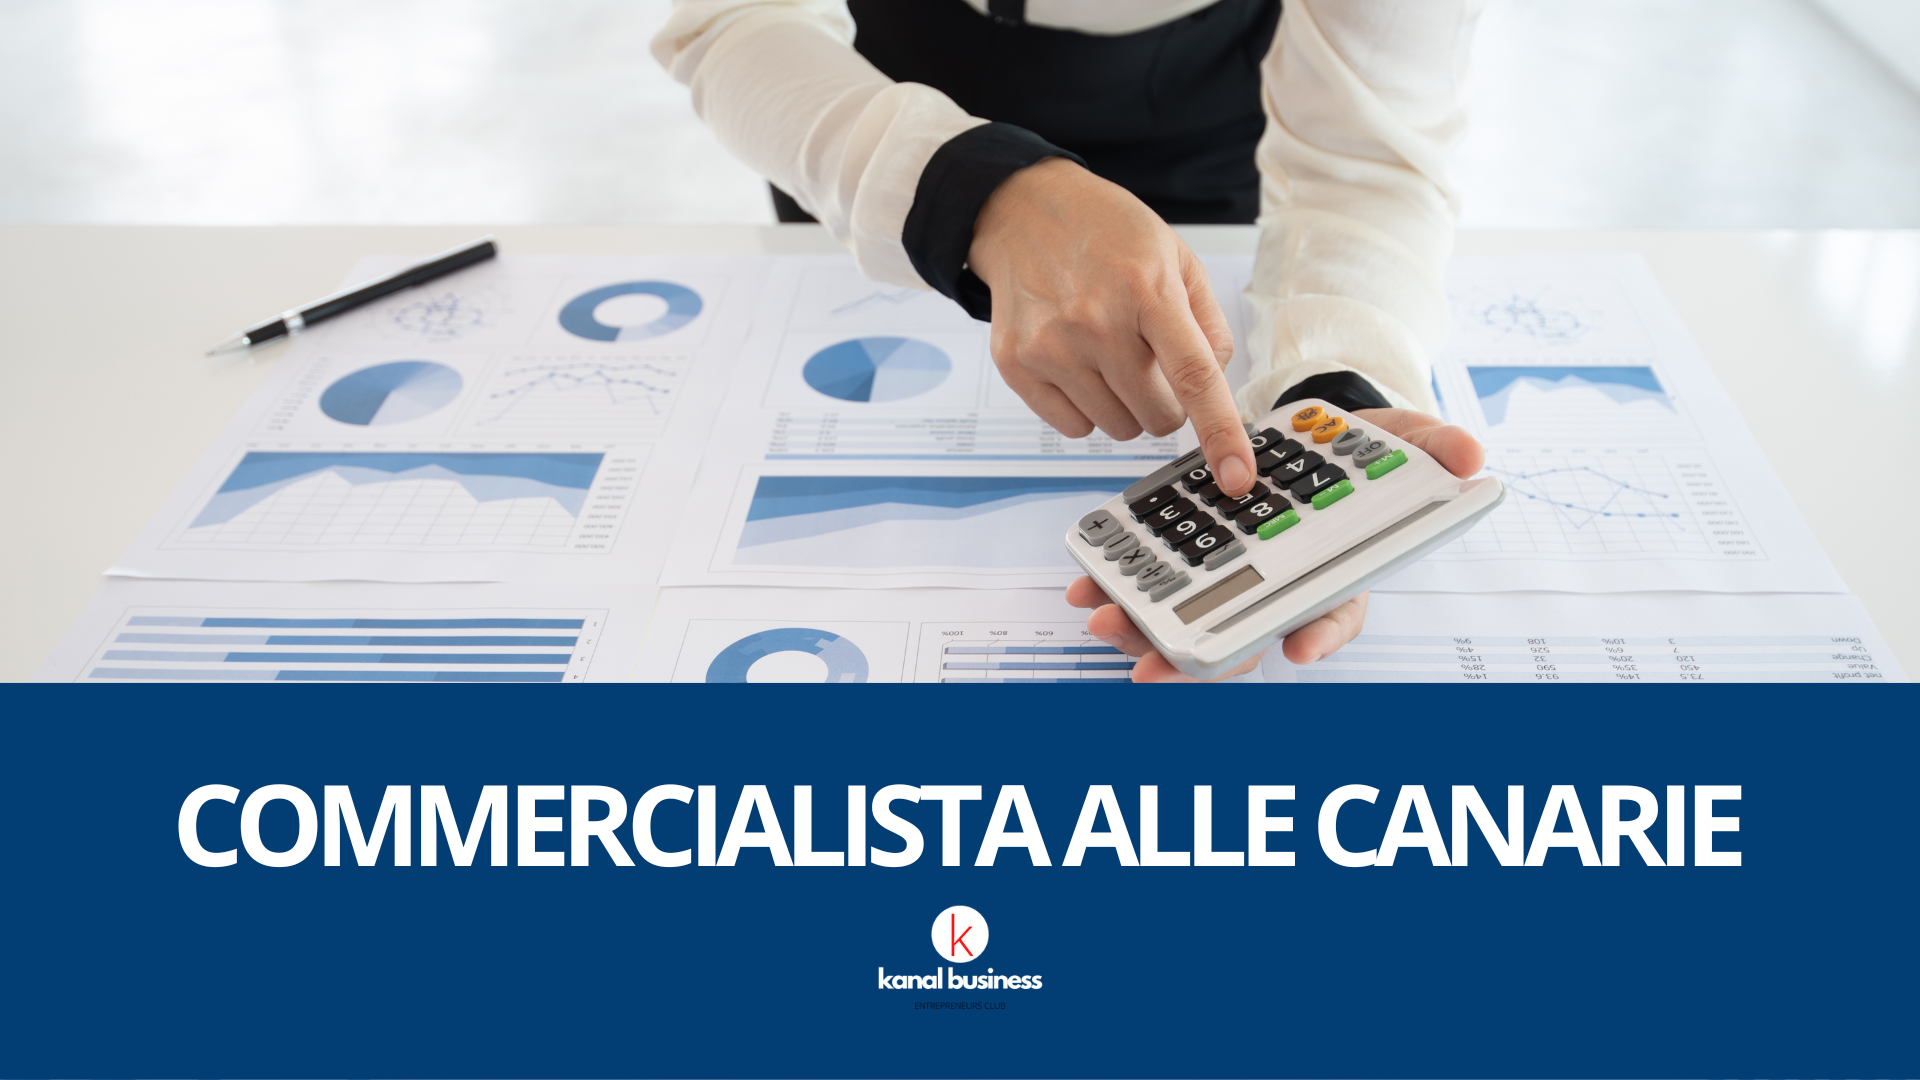 Commercialista Italiano alle Canarie +34 654 95 17 25 info@kanalbusiness.com